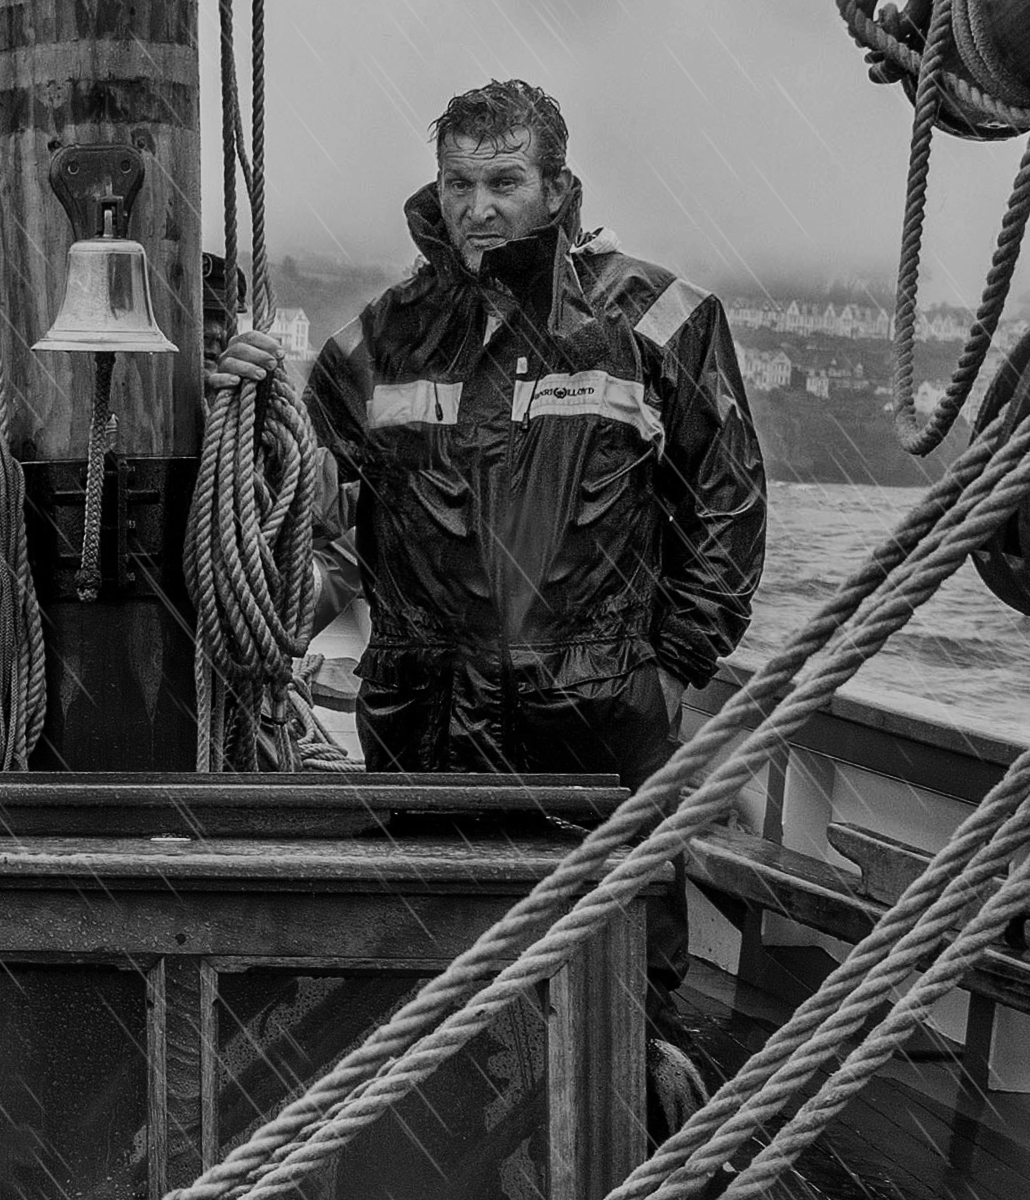 The Joys of Sailing by Ian Kippax